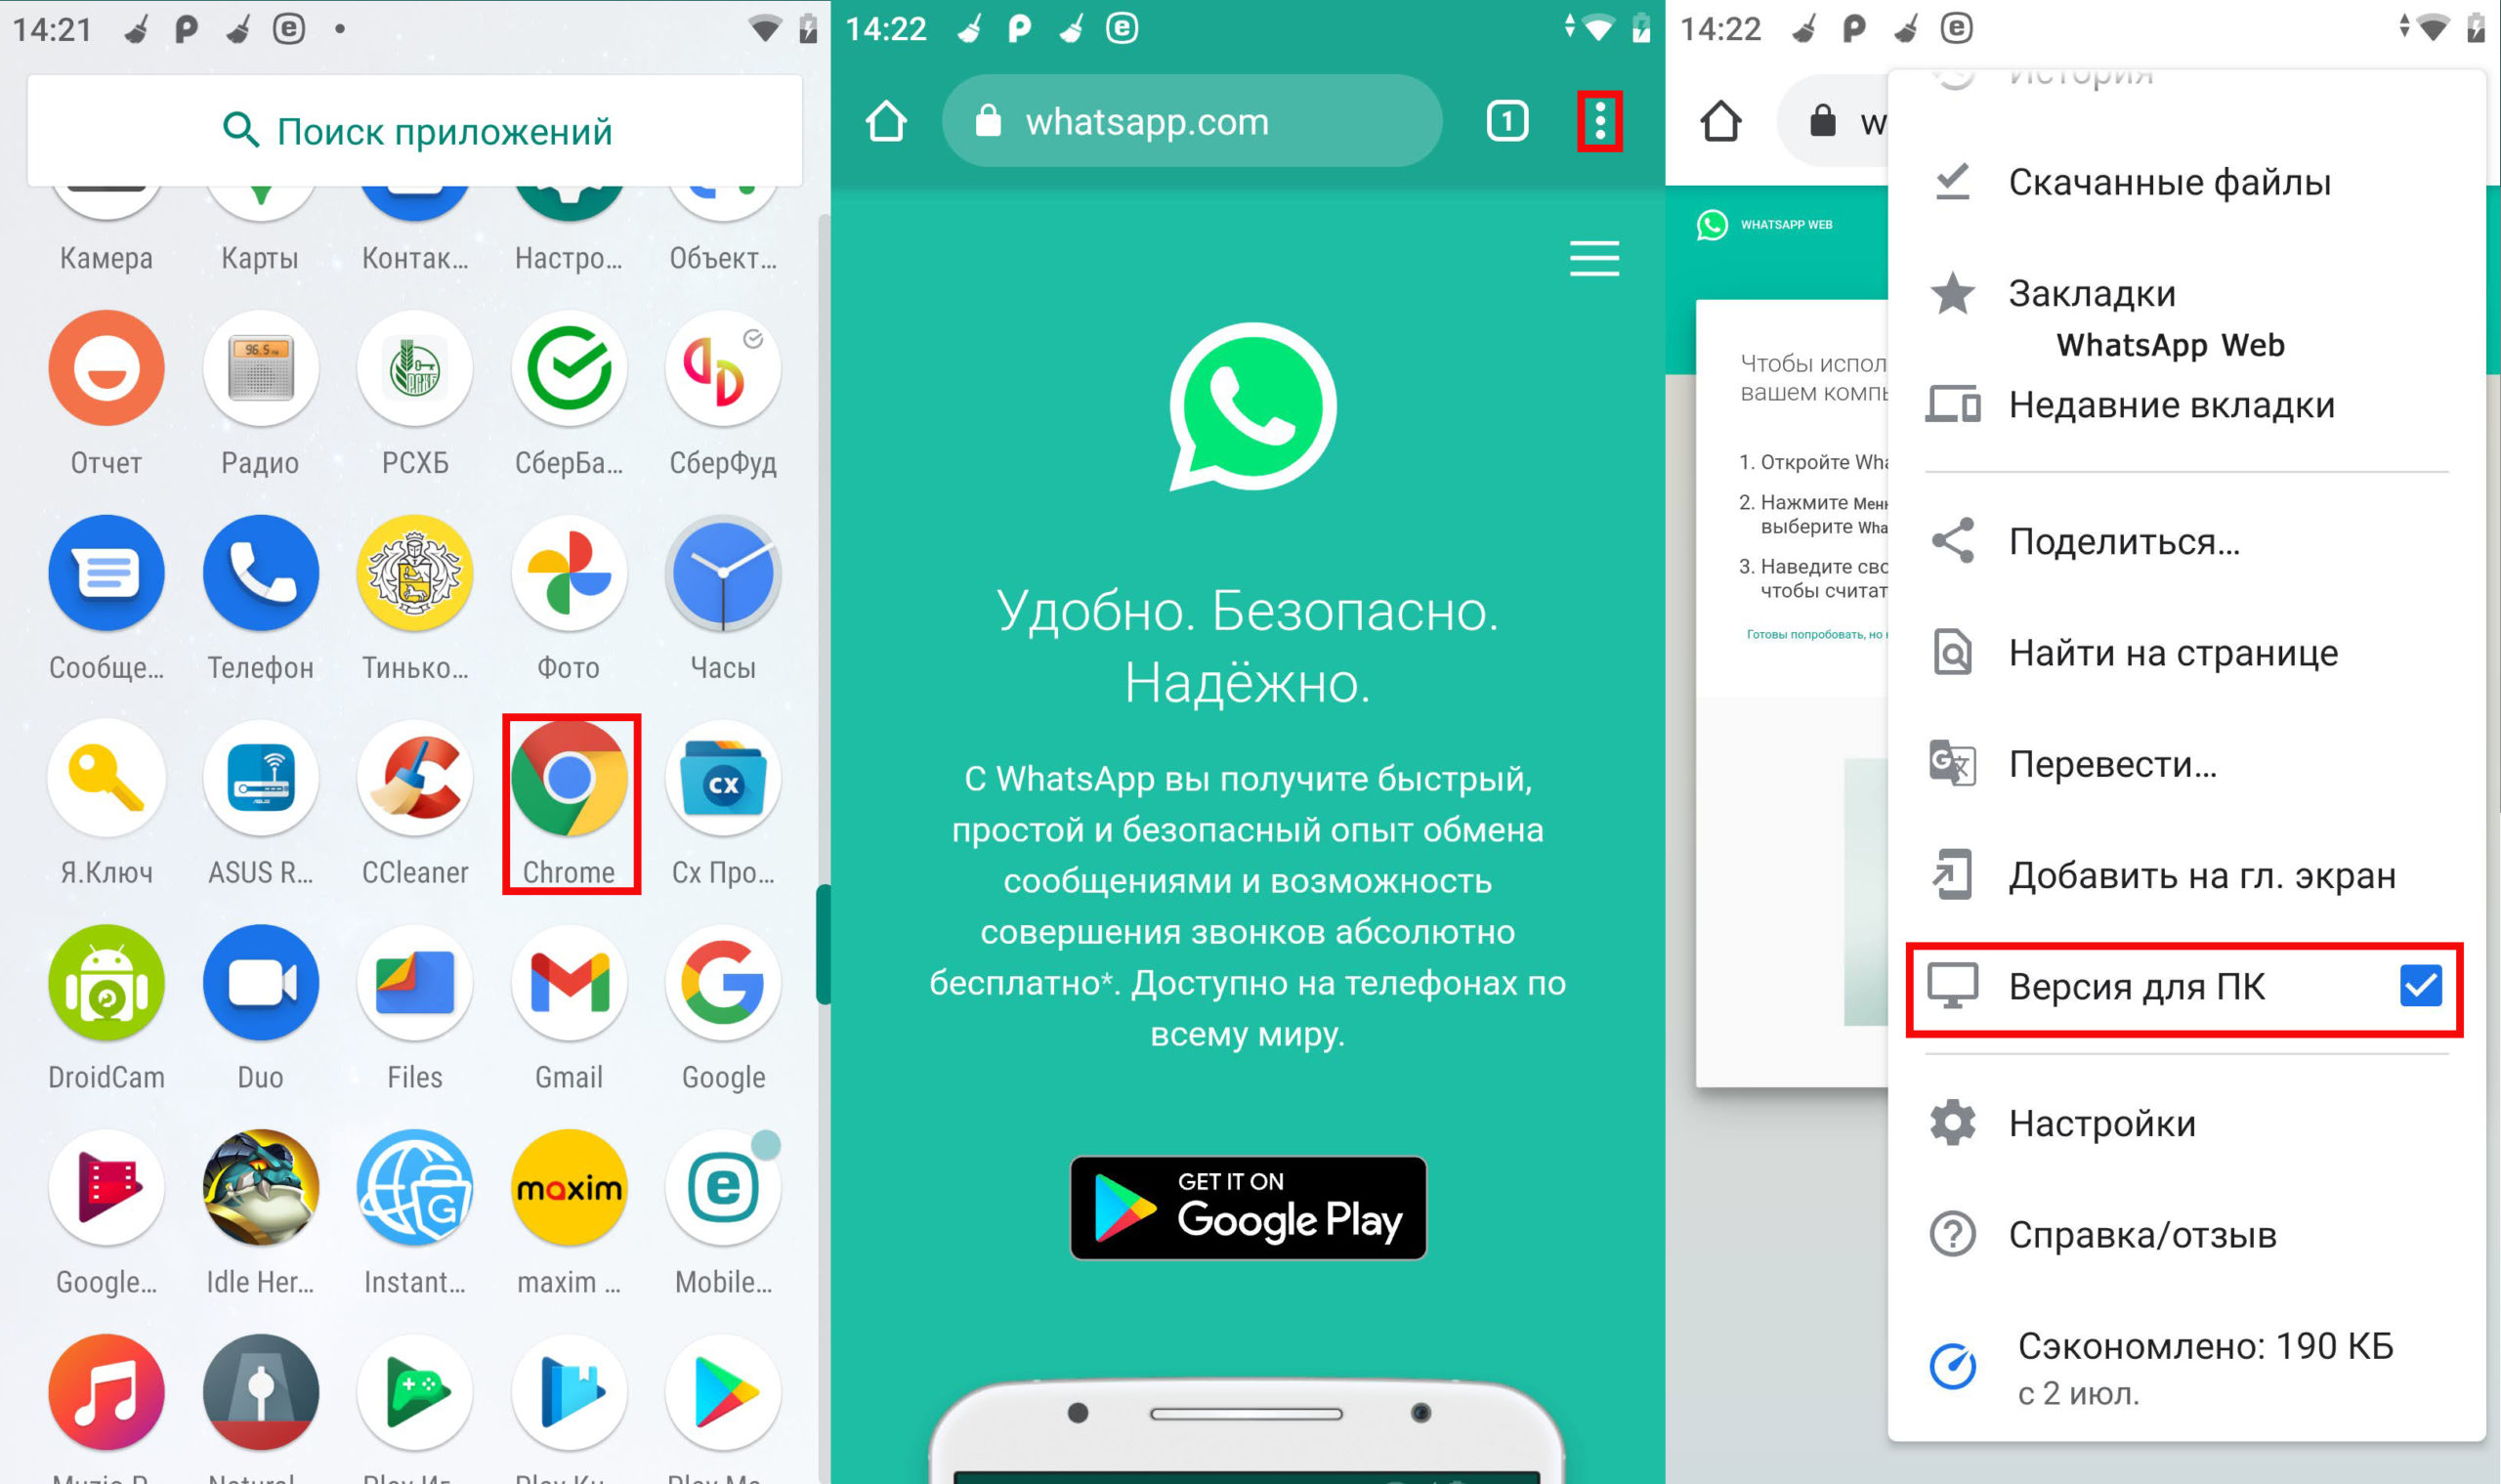 Как пользоваться WhatsApp Web на компьютере, Android и iOS